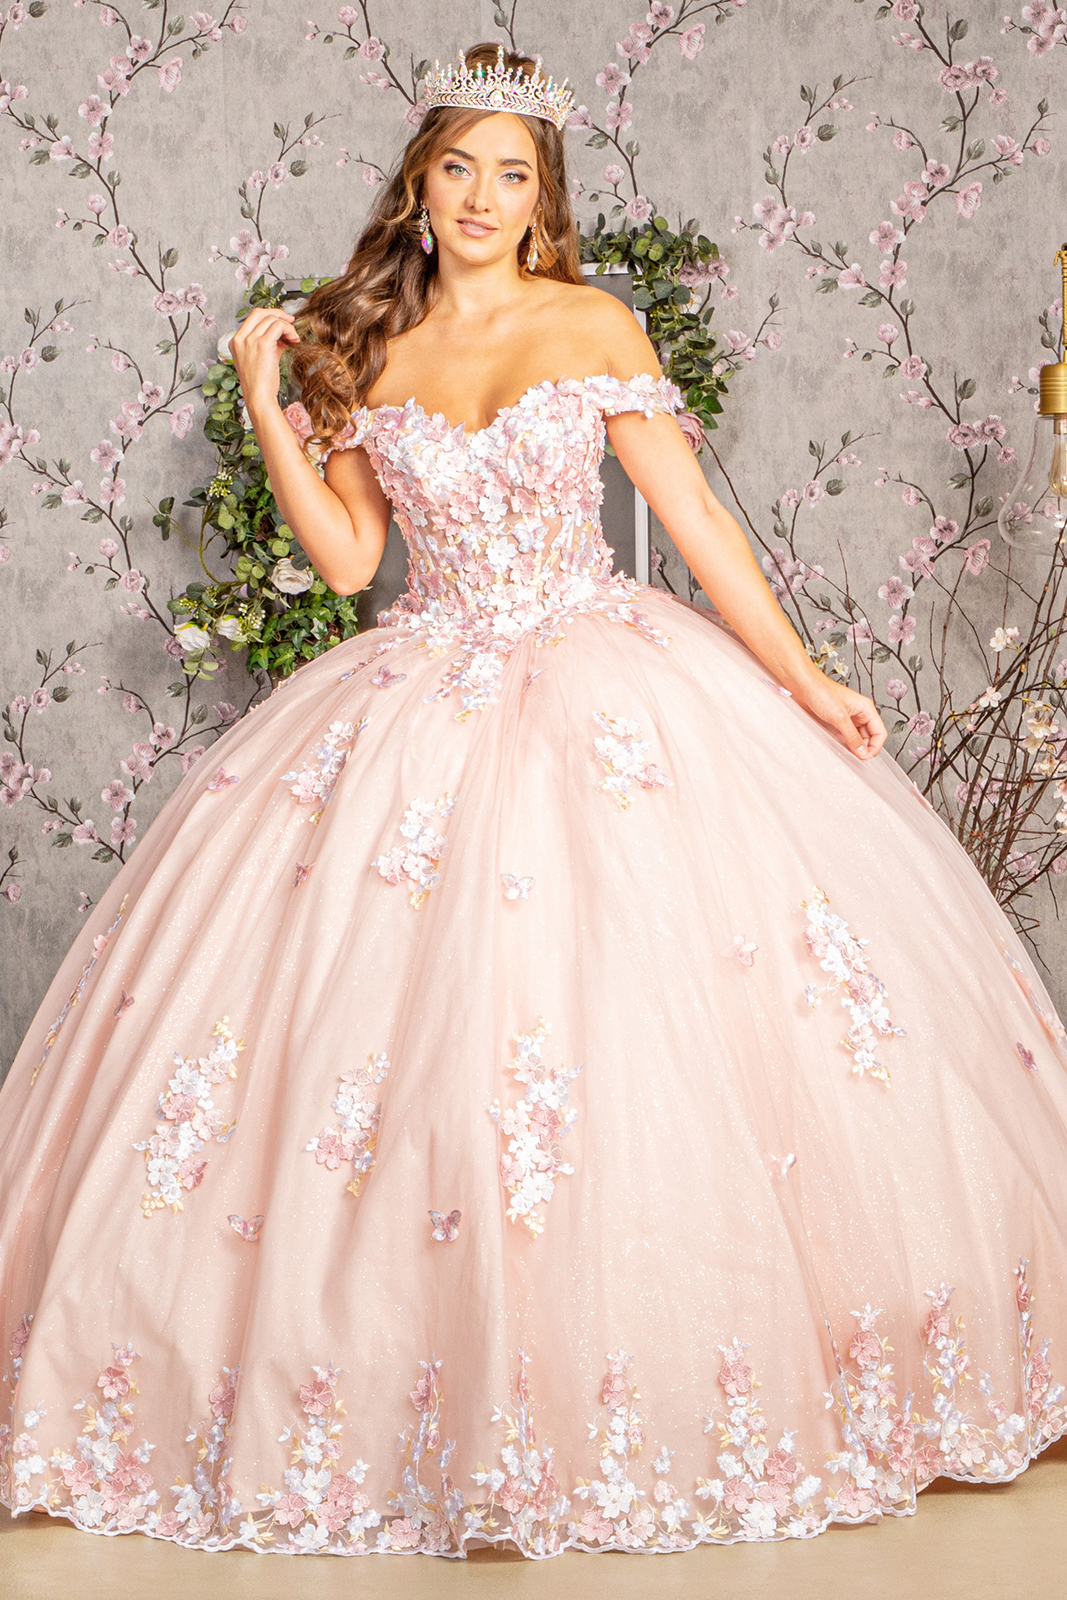 3D Floral Applique Bustier Illusion Top Quinceanera Ball Gown